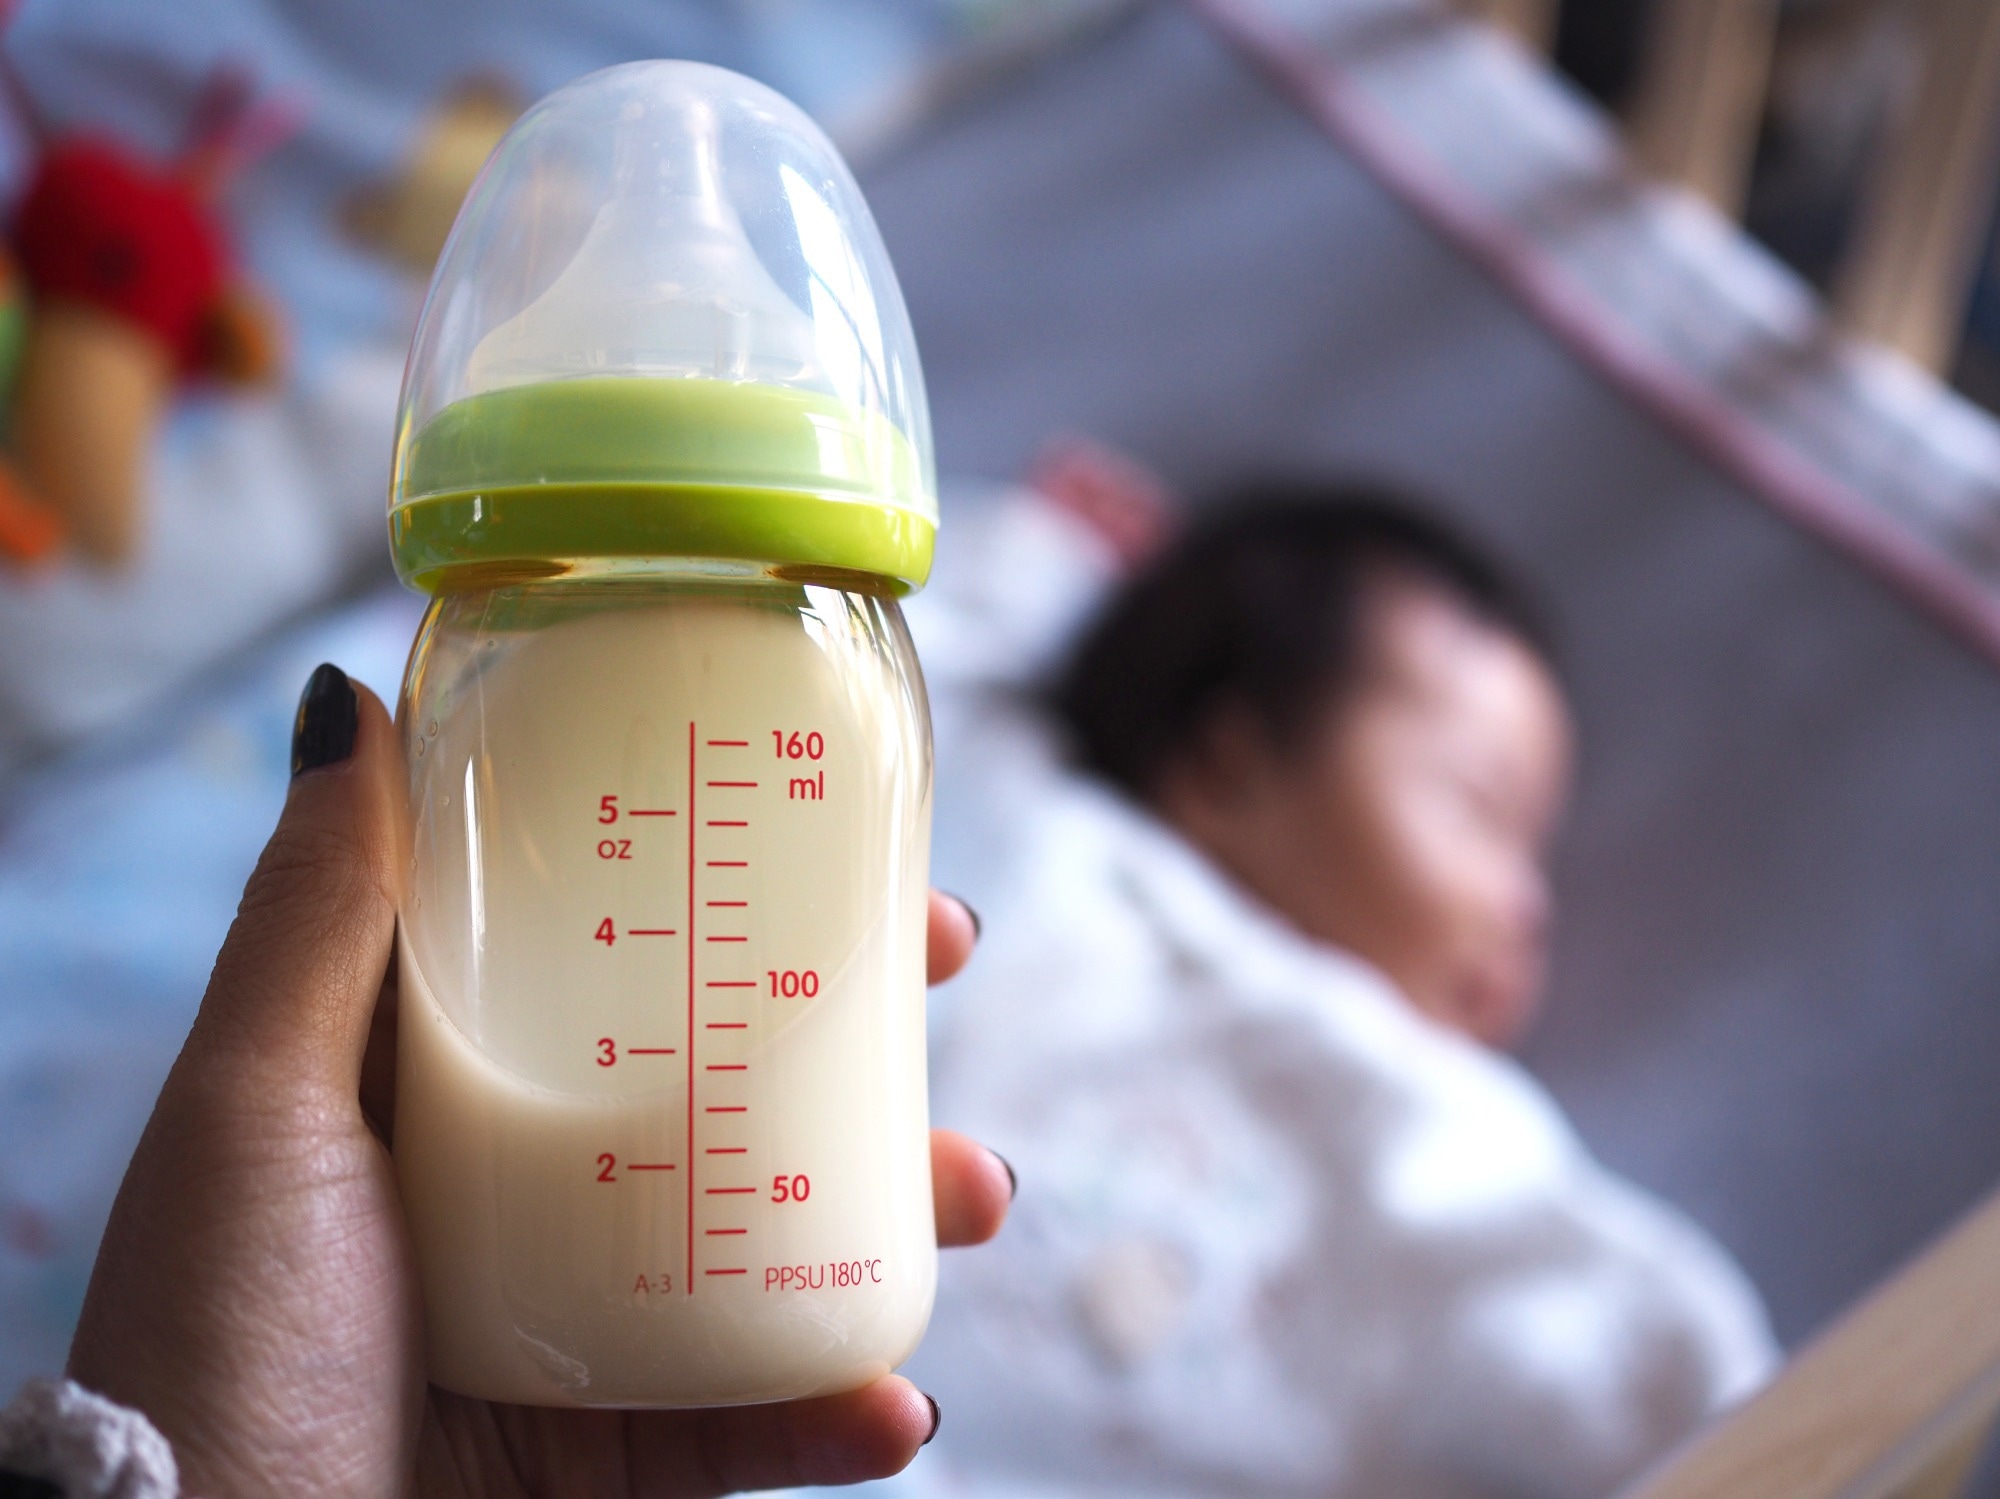 Study: Prenatal SARS-CoV-2 infection alters postpartum human milk-derived extracellular vesicles. Image Credit: parinoi / Shutterstock.com